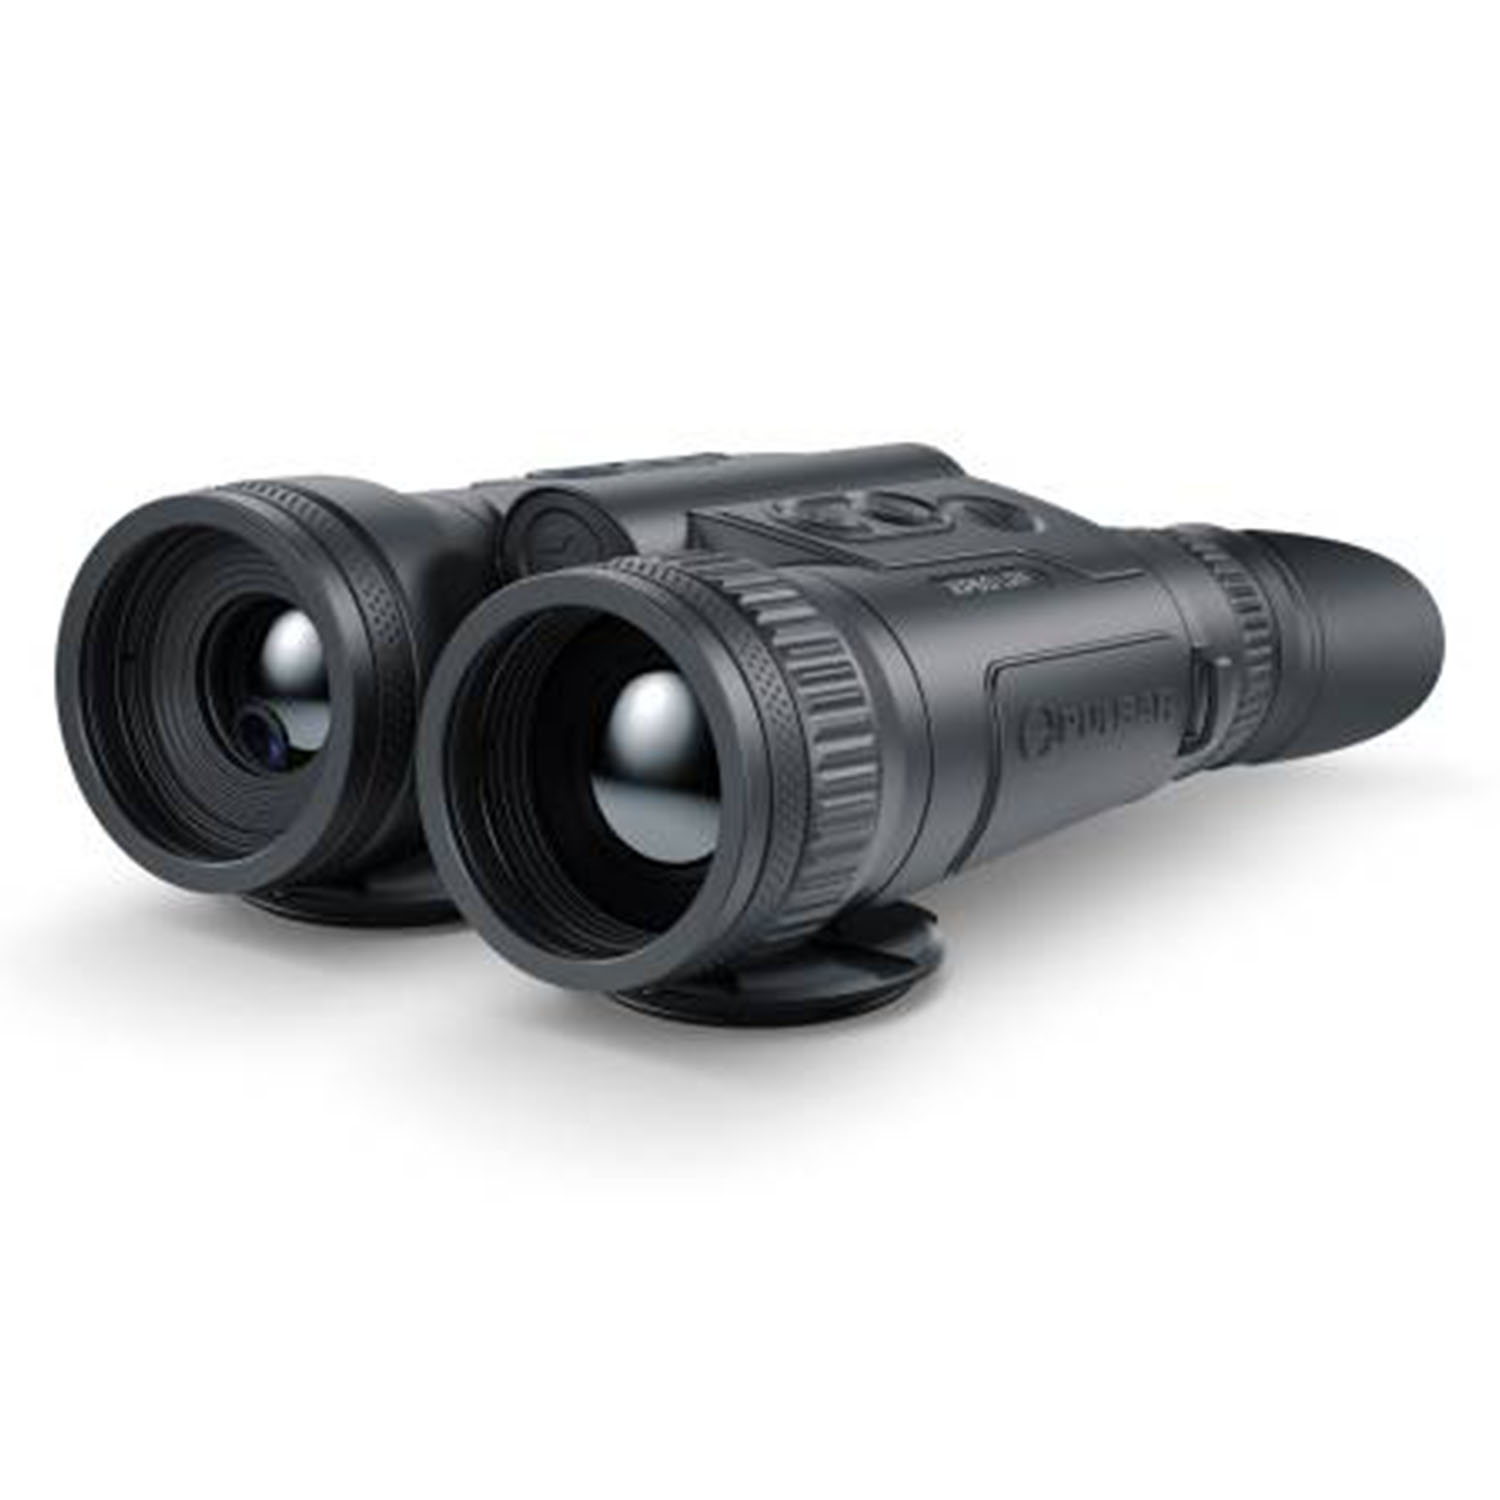 Thermal Imaging Binoculars Merger LRF XP50 - Shop by Activity